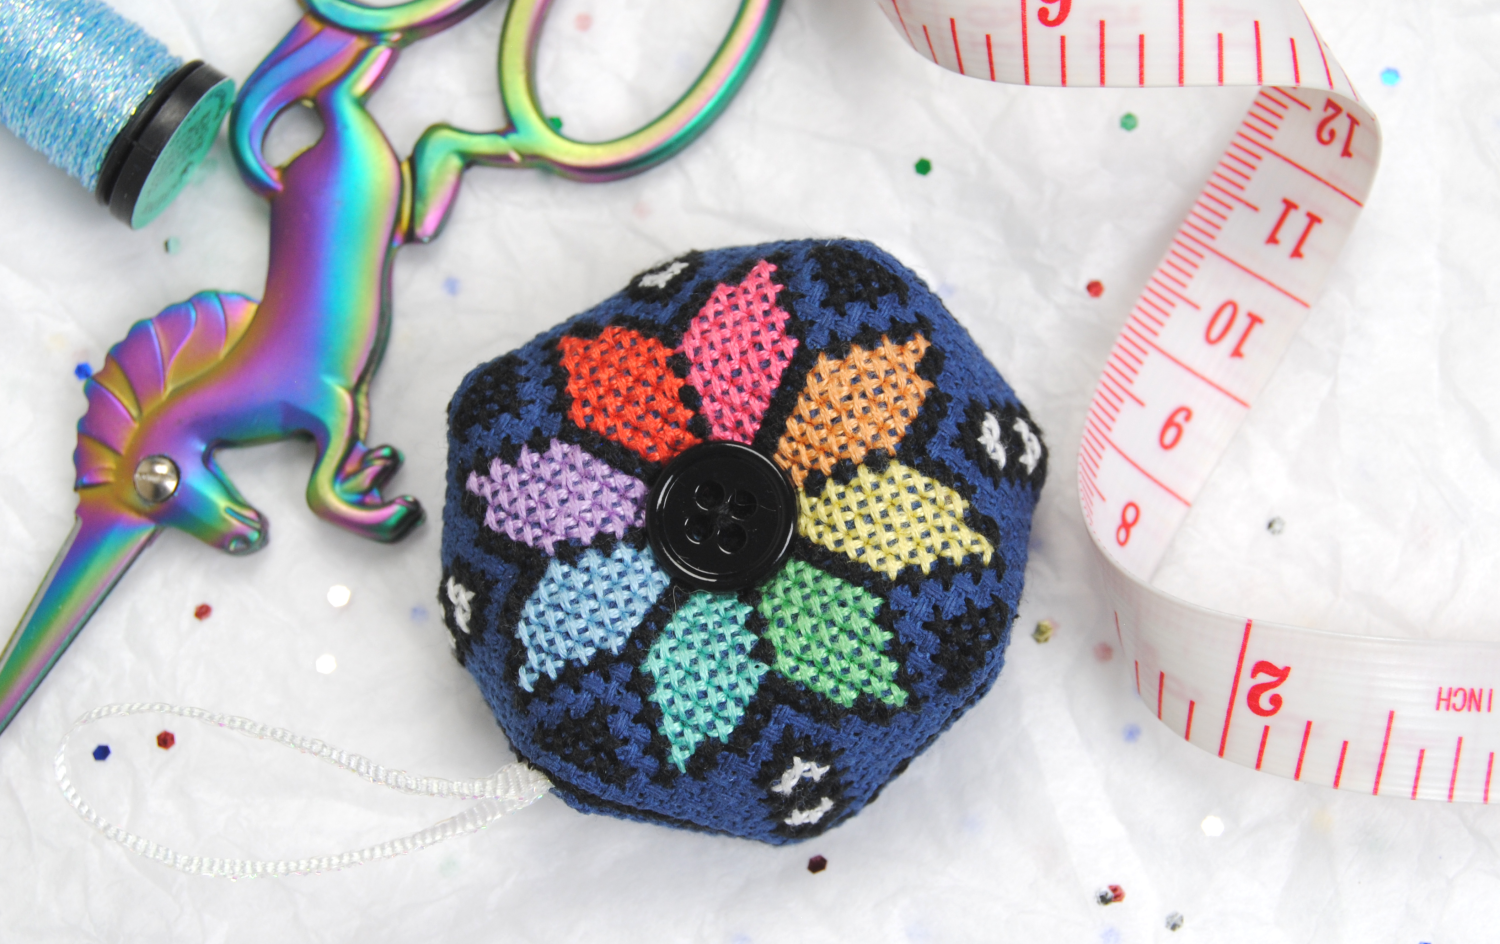 How to make a no-sew cross stitch pincushion - Stitched Modern